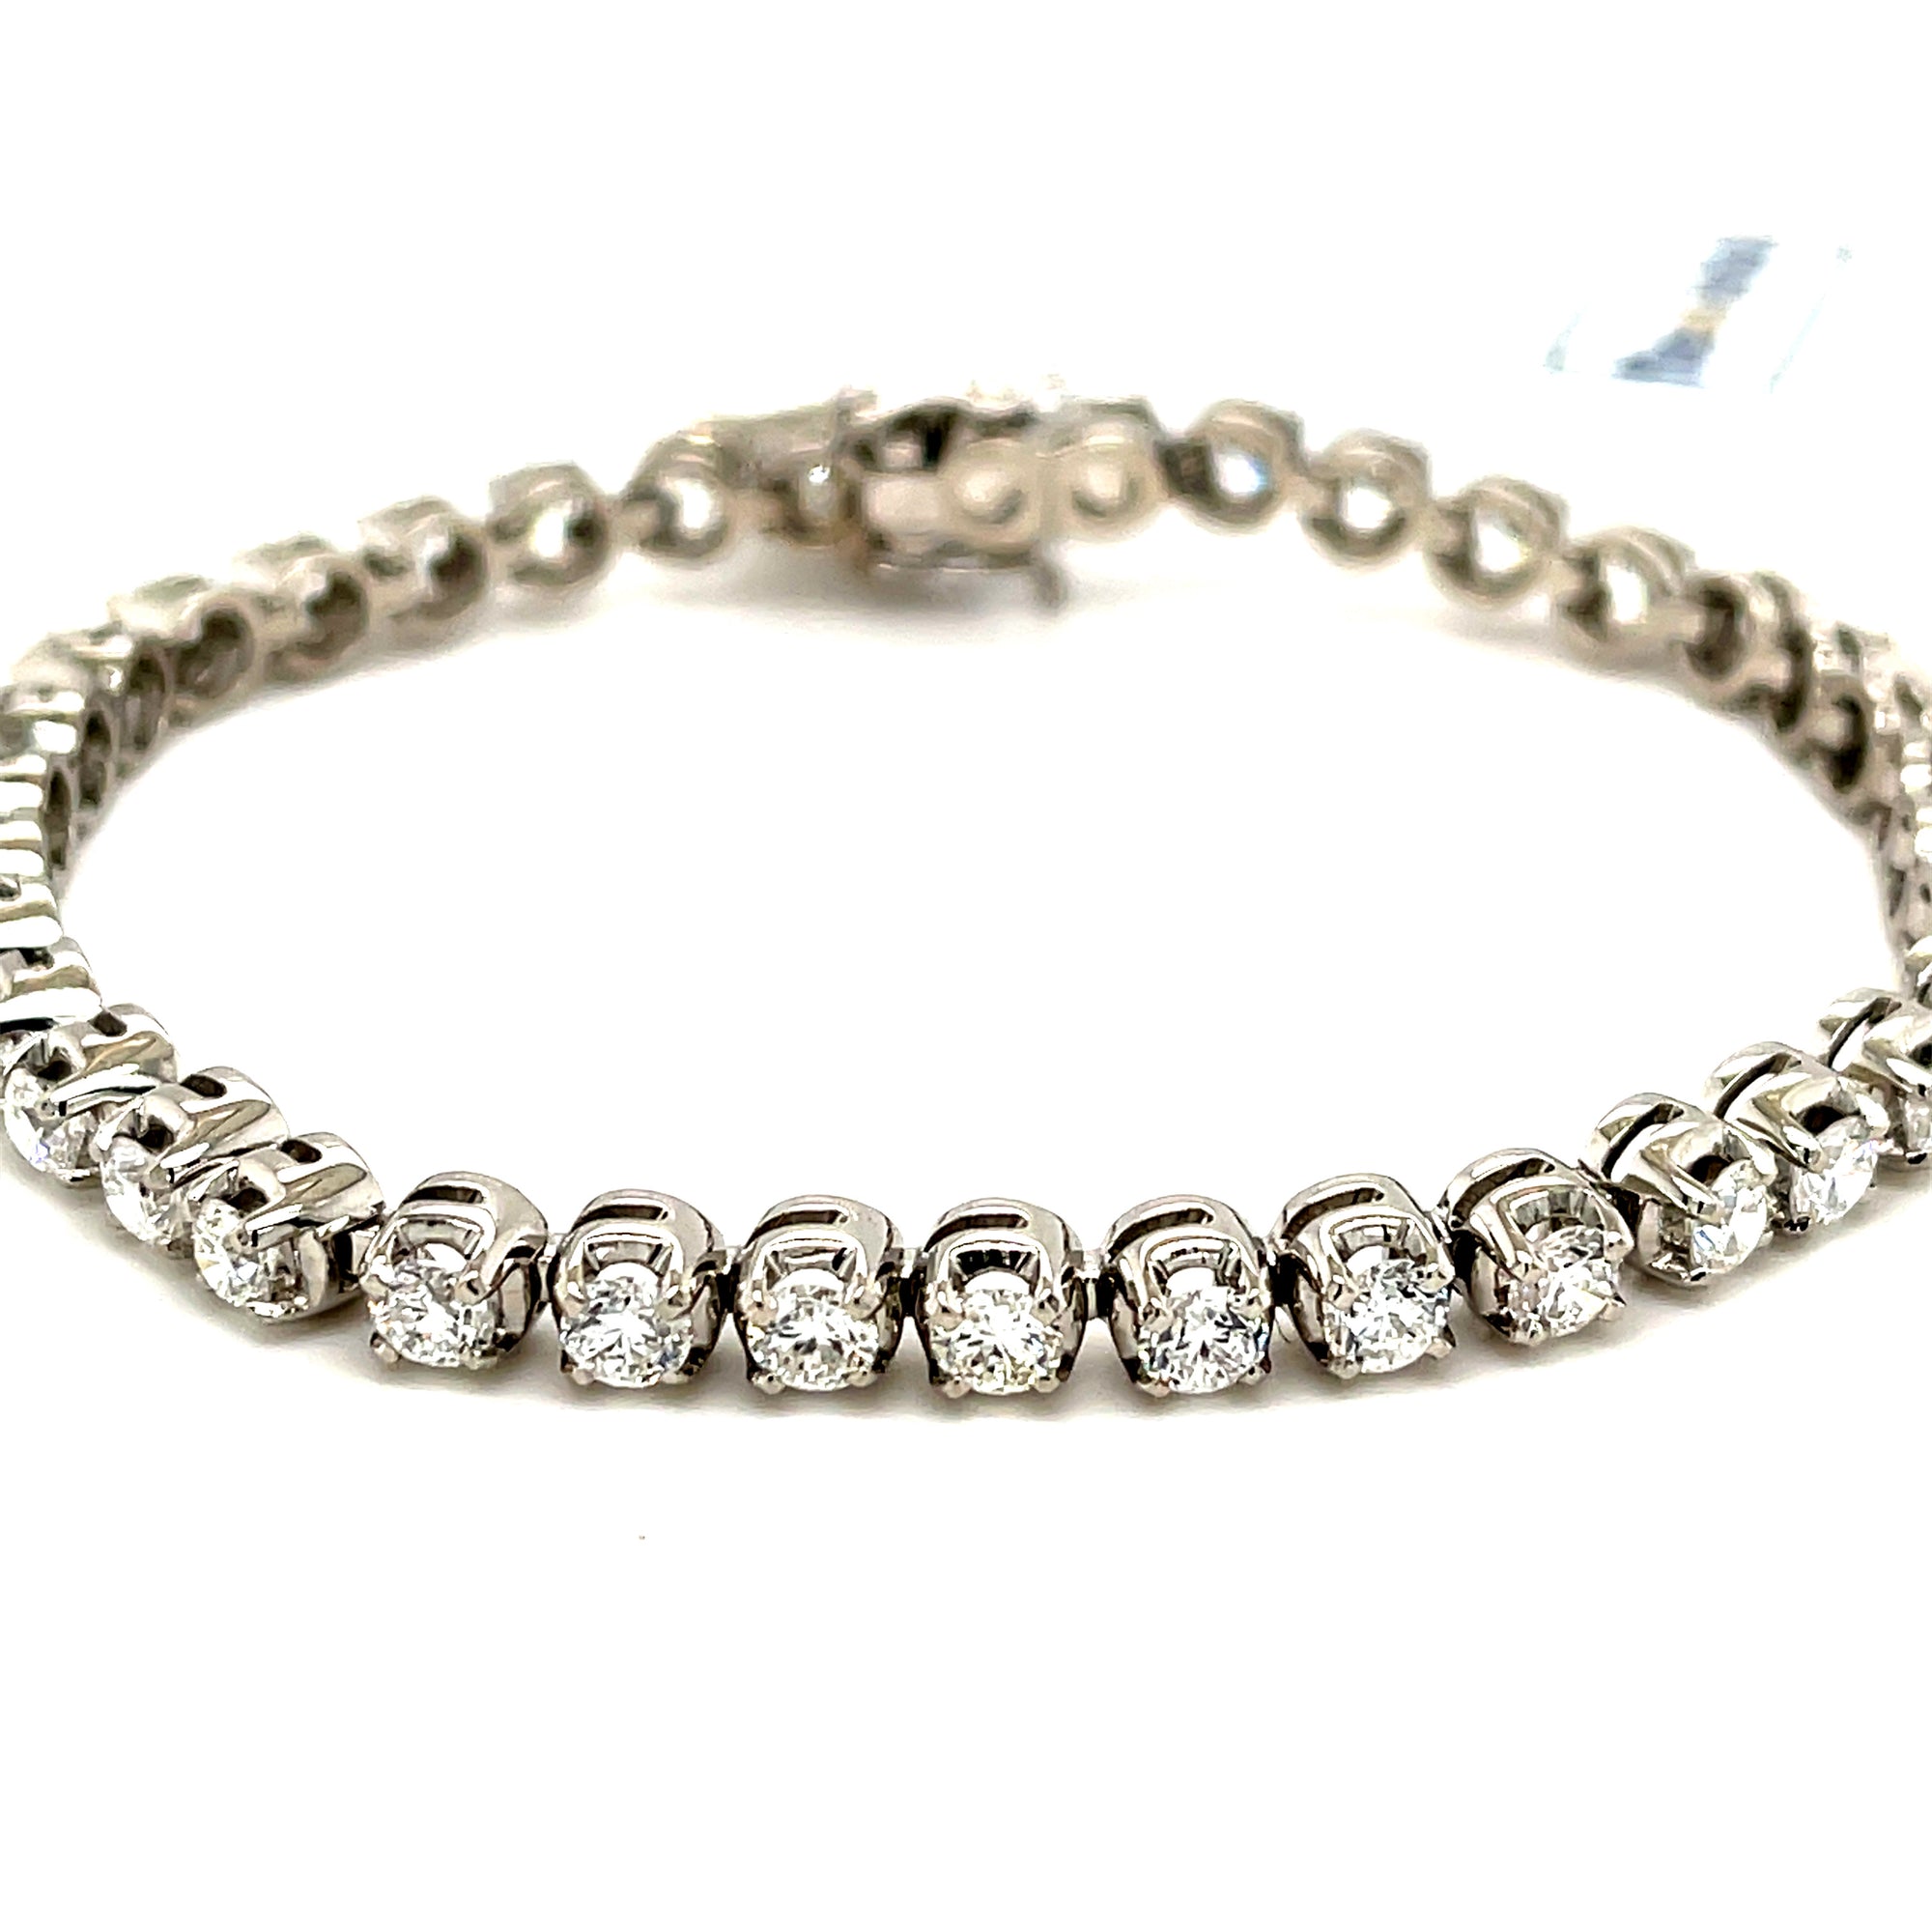 6.03ct round brilliant cut diamond tennis bracelet, platinum, G/H colour, SI clarity